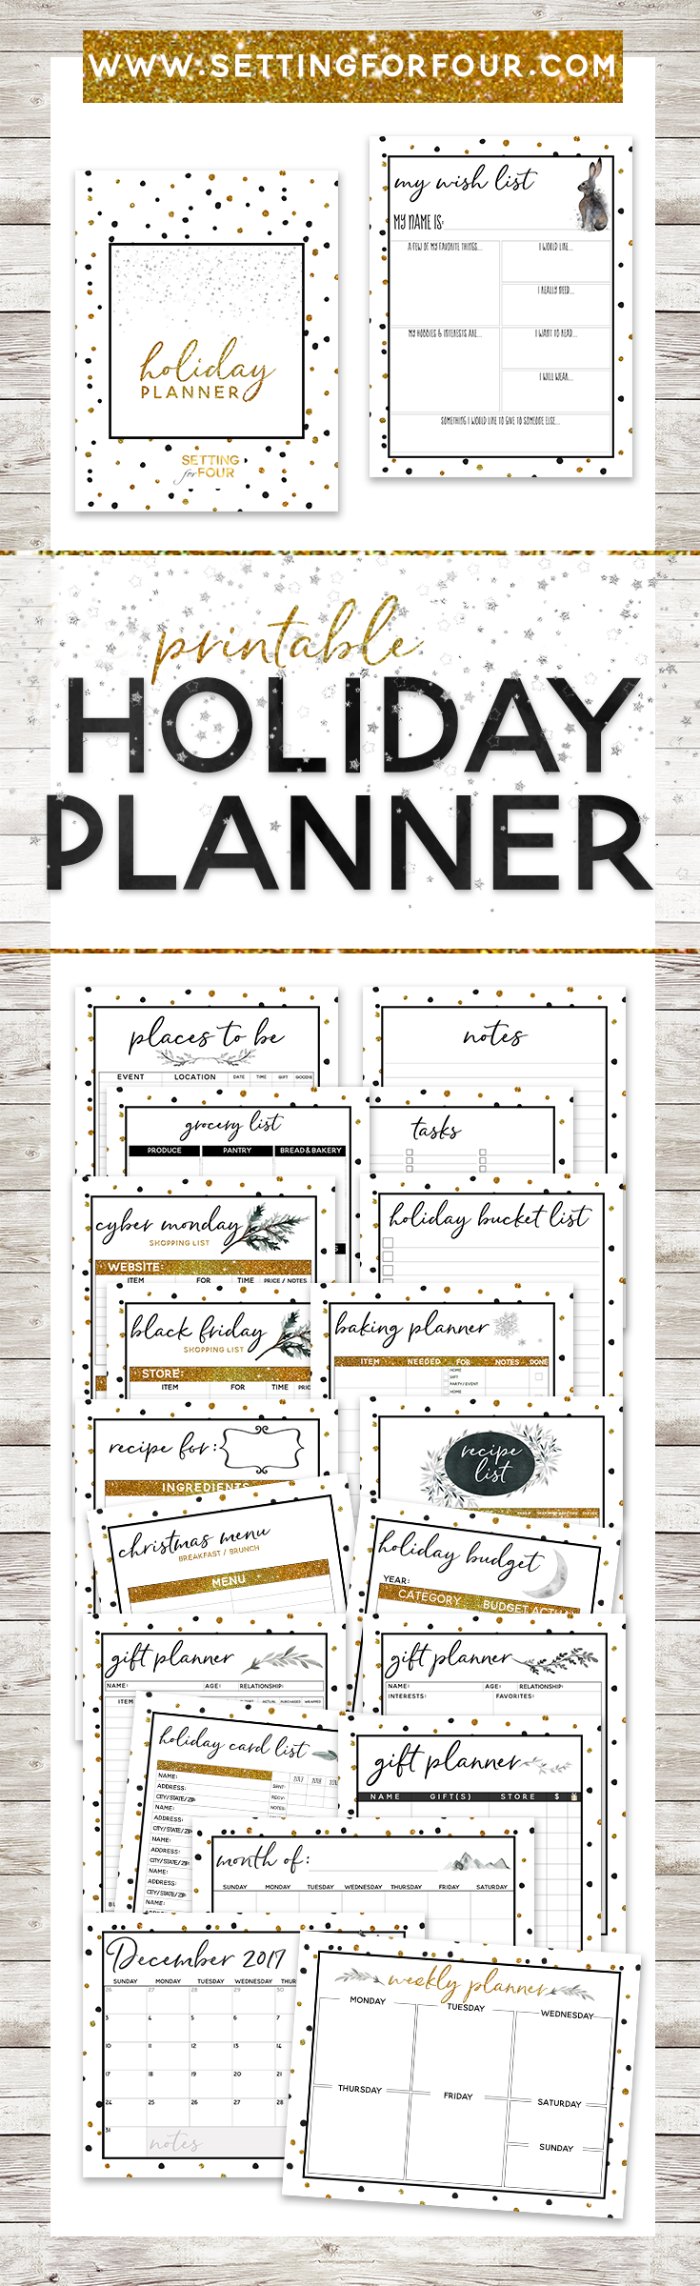 Amazing Holiday Planner Printable - Christmas wishlist, menu planners, gift list, calendars and more!